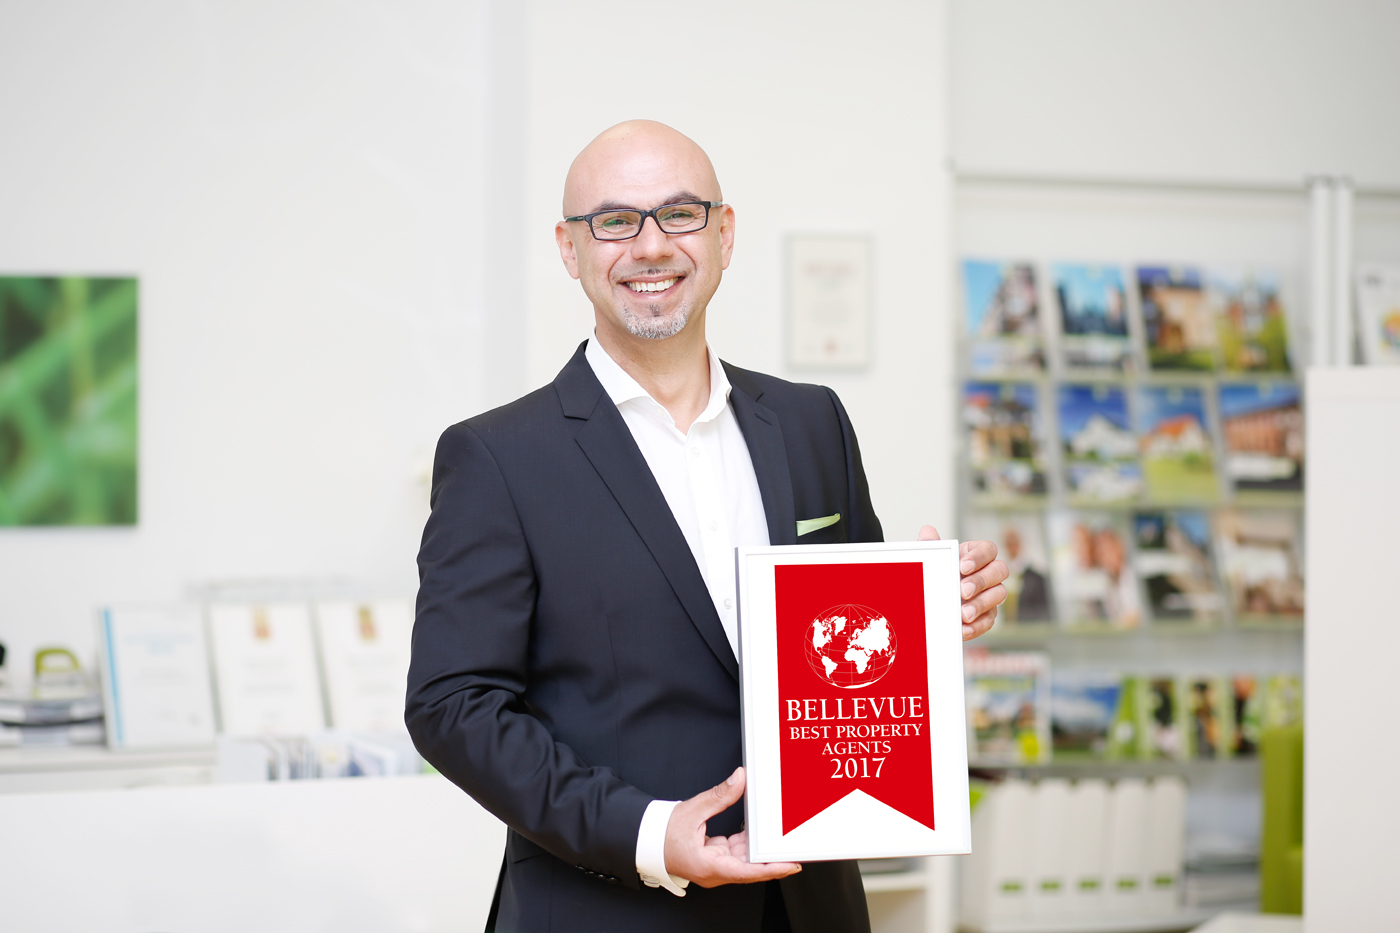 Bellevue Best Property Agent 2017 - Citak Immobilien.jpg
				